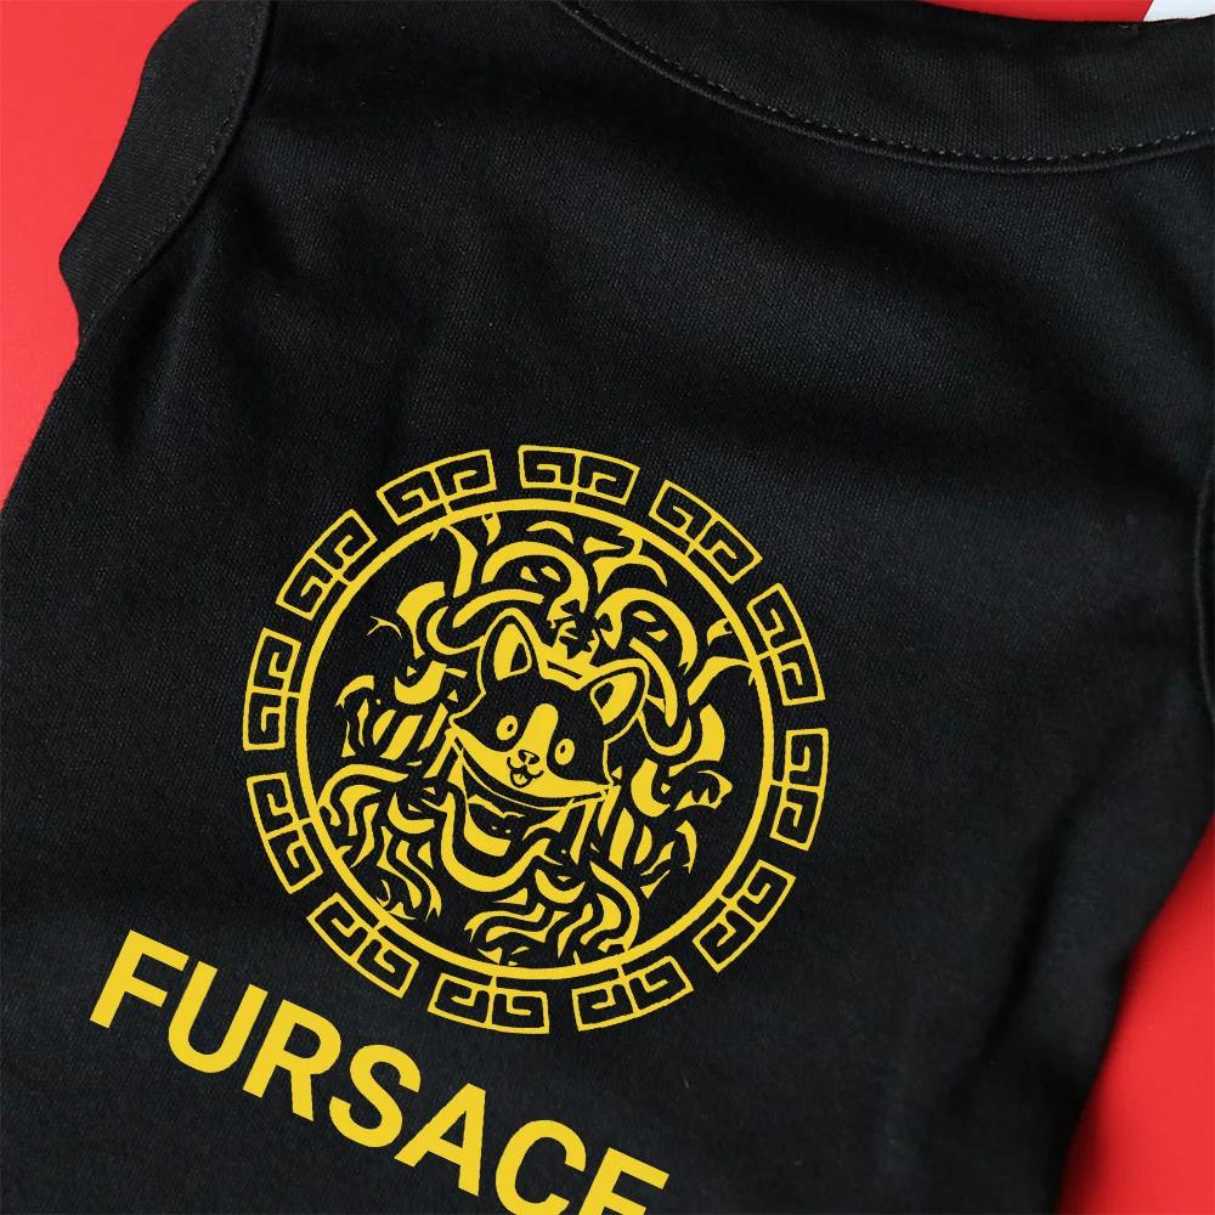 Fursace Dog Tshirt, singlet, sleeve less, clothing